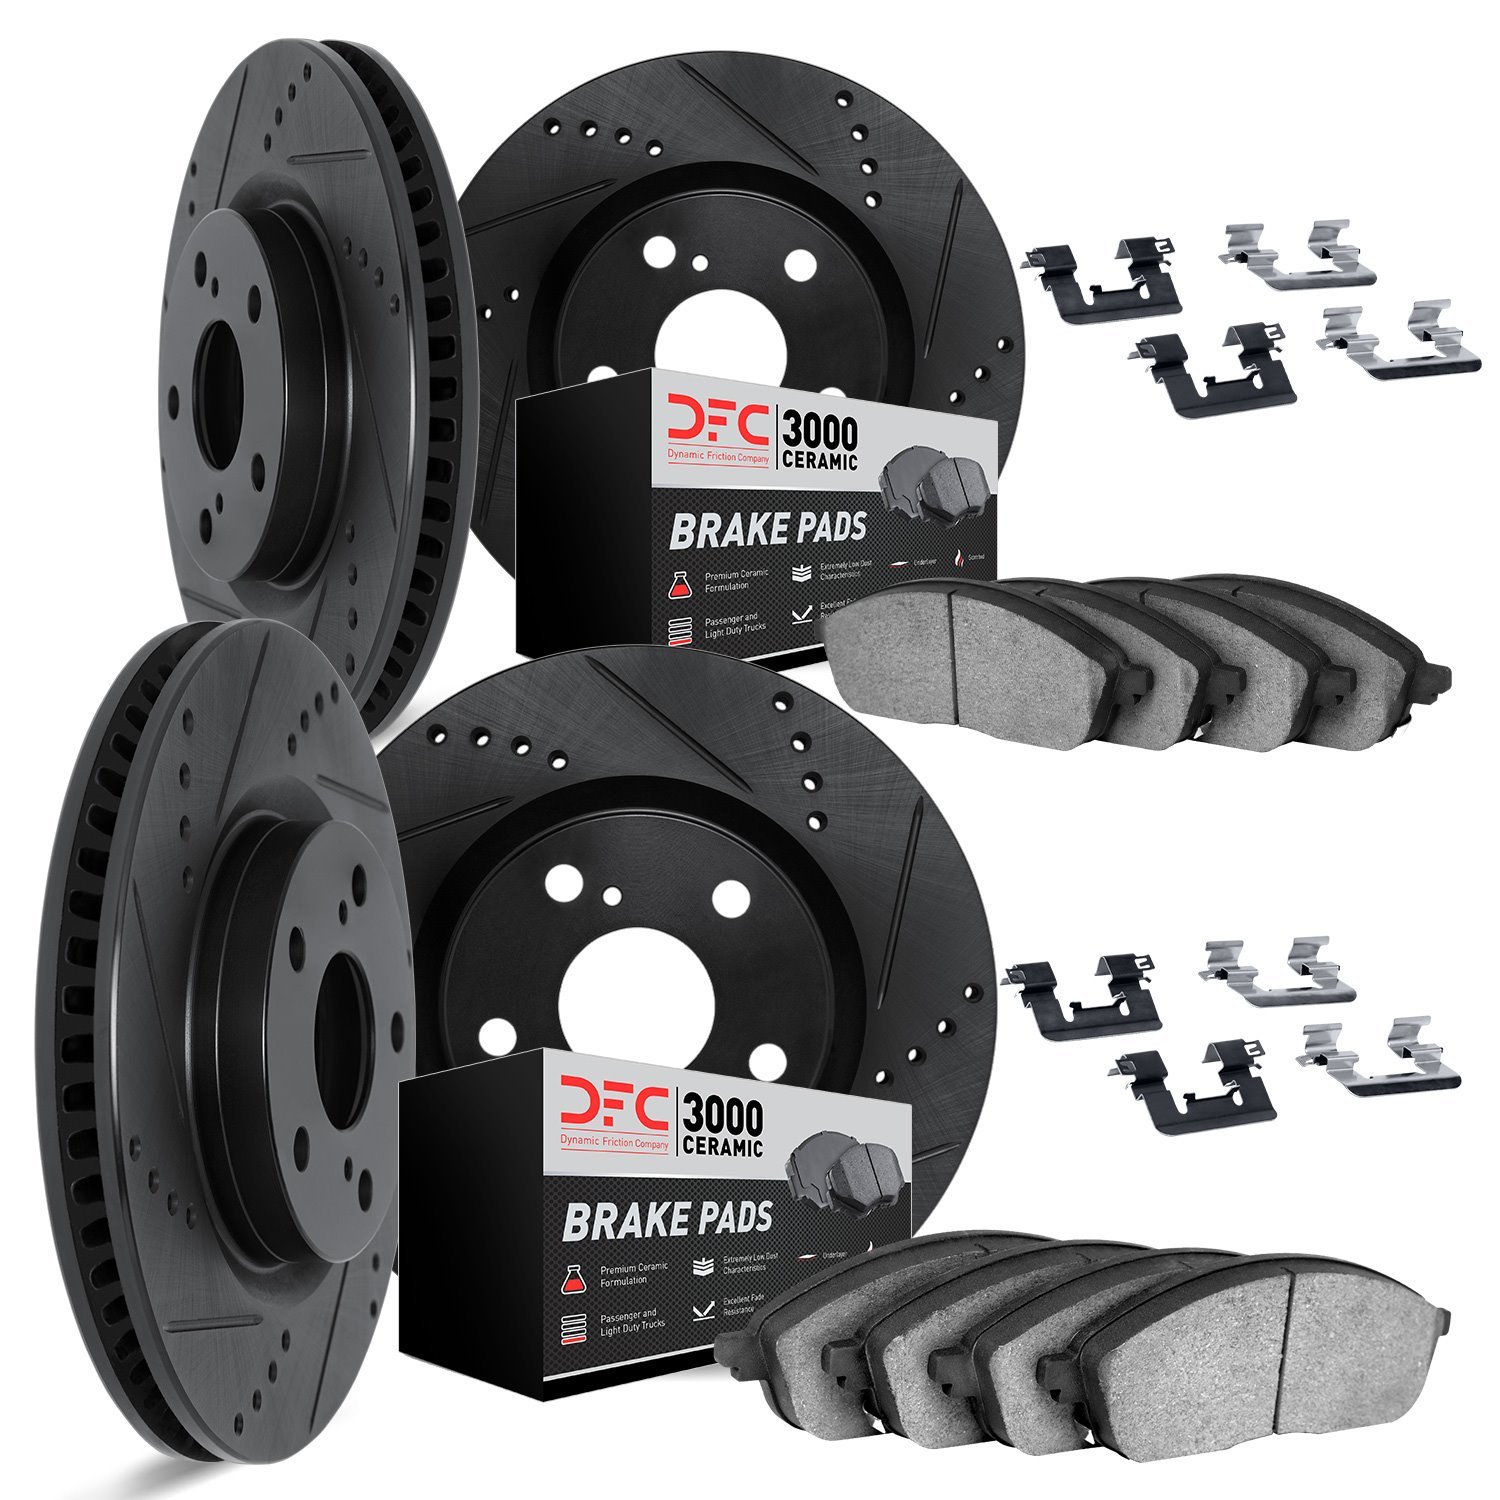 8314-67073 Drilled/Slotted Brake Rotors with 3000-Series Ceramic Brake Pads Kit & Hardware [Black], Fits Select Infiniti/Nissan,